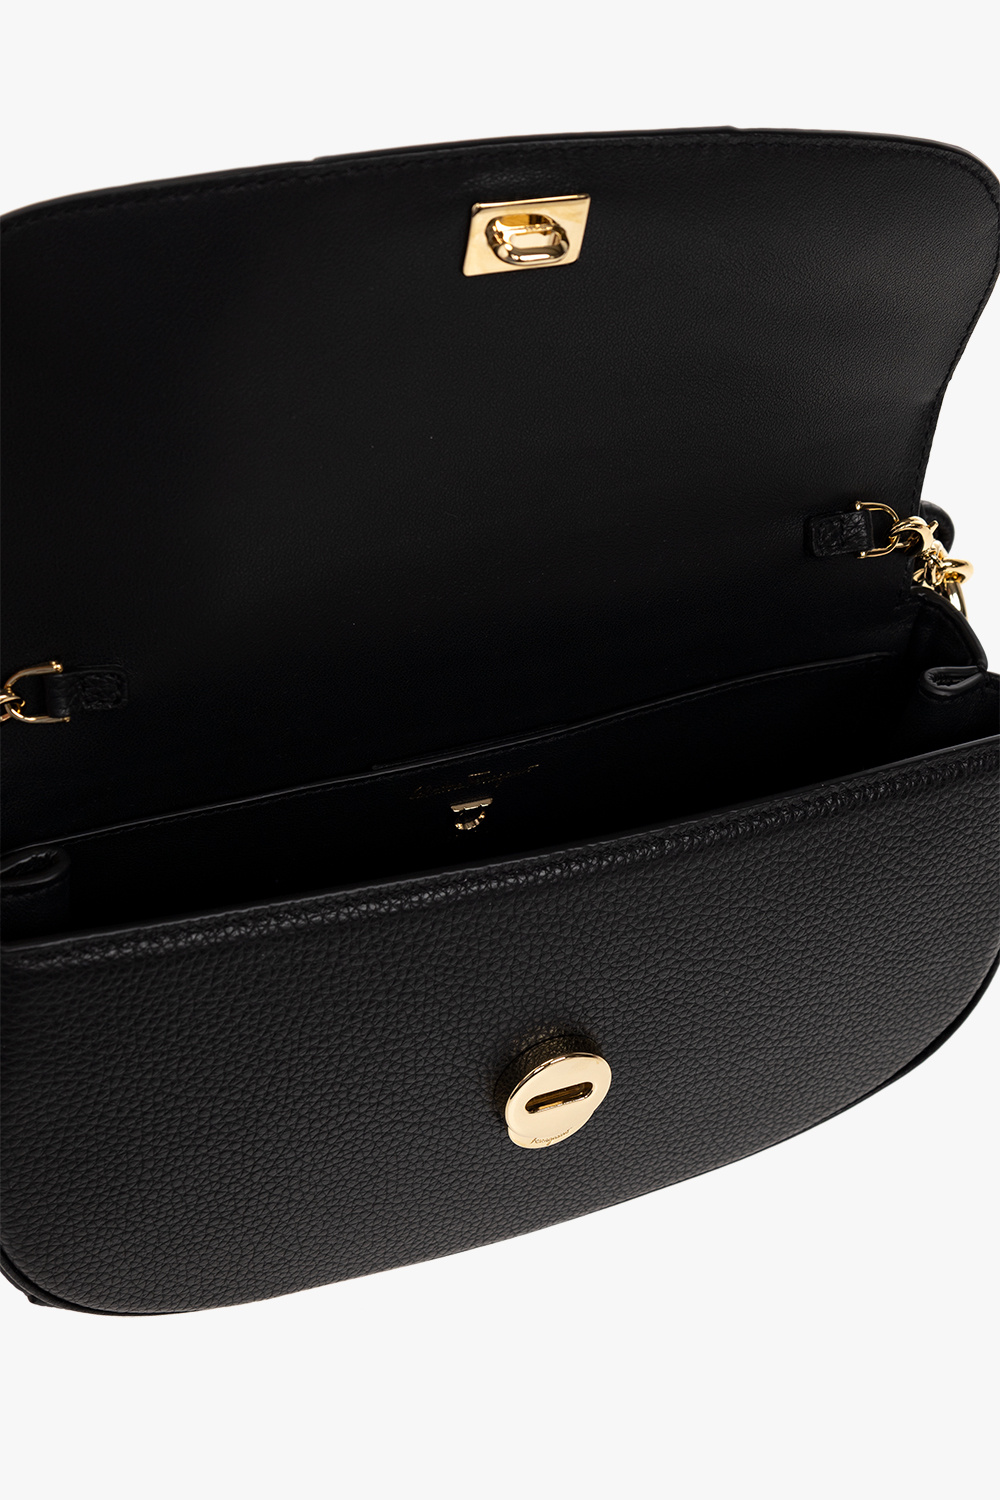 Salvatore Ferragamo ‘Glam’ leather shoulder bag